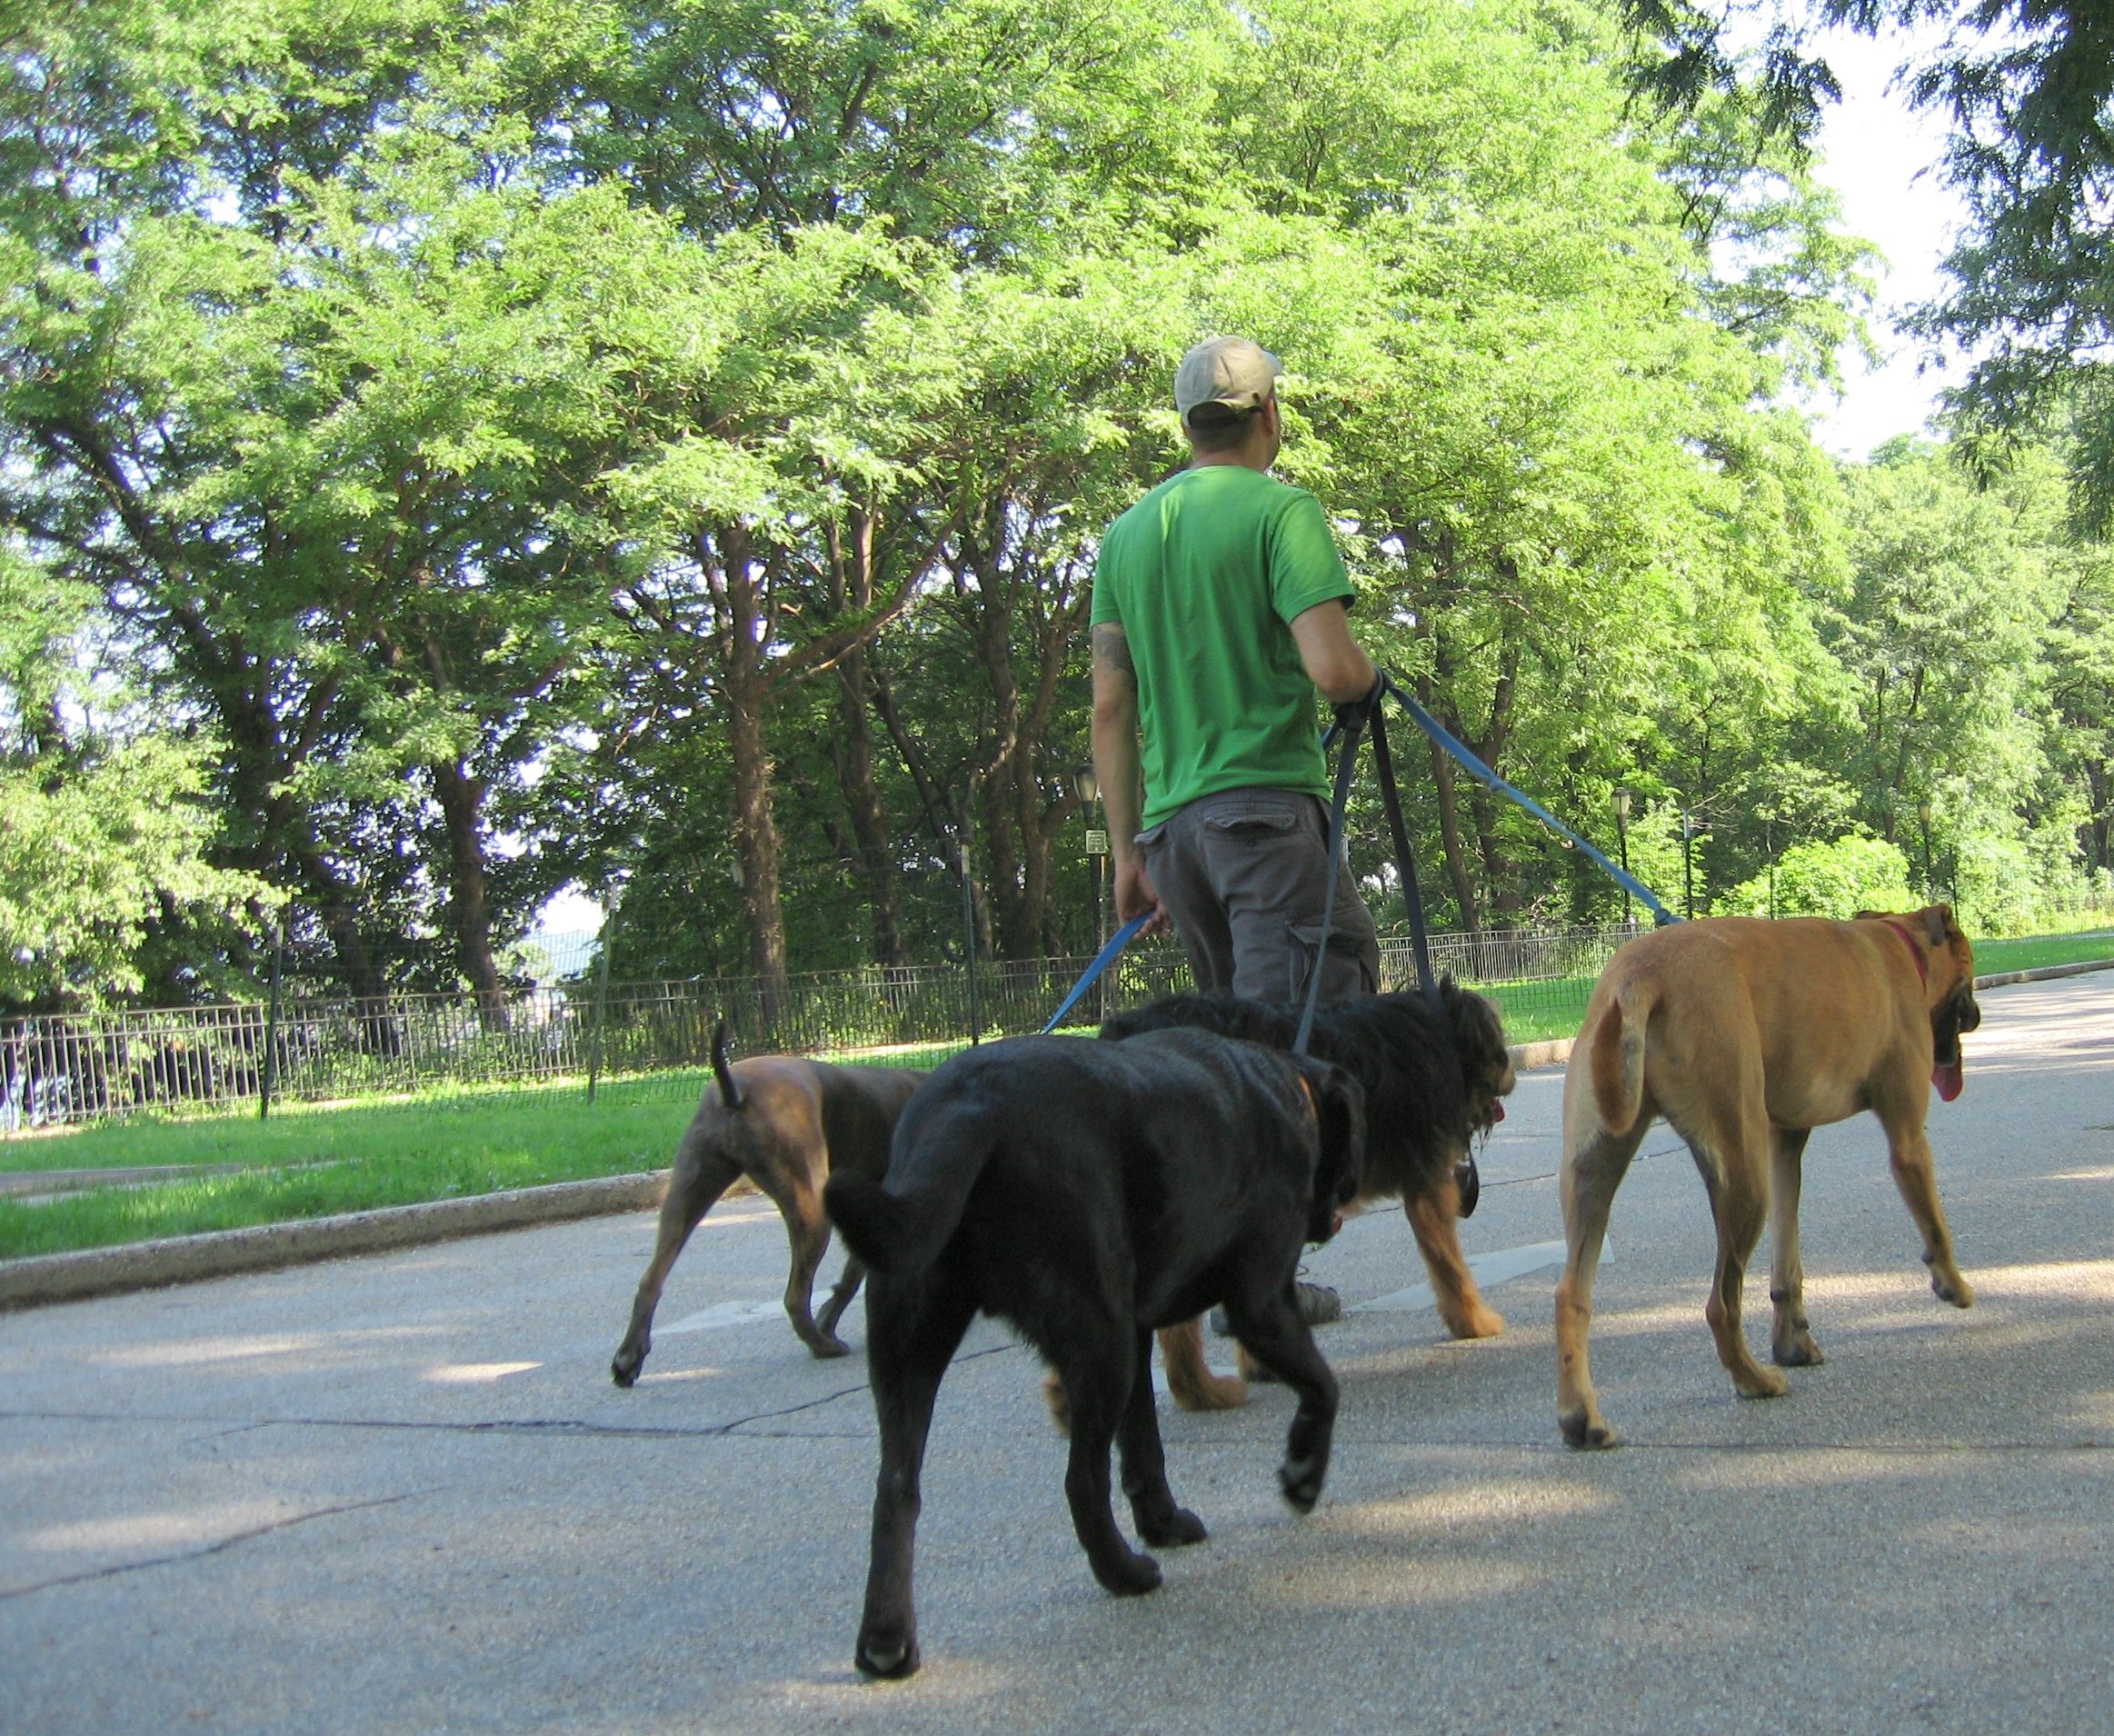 professional dog walkers association